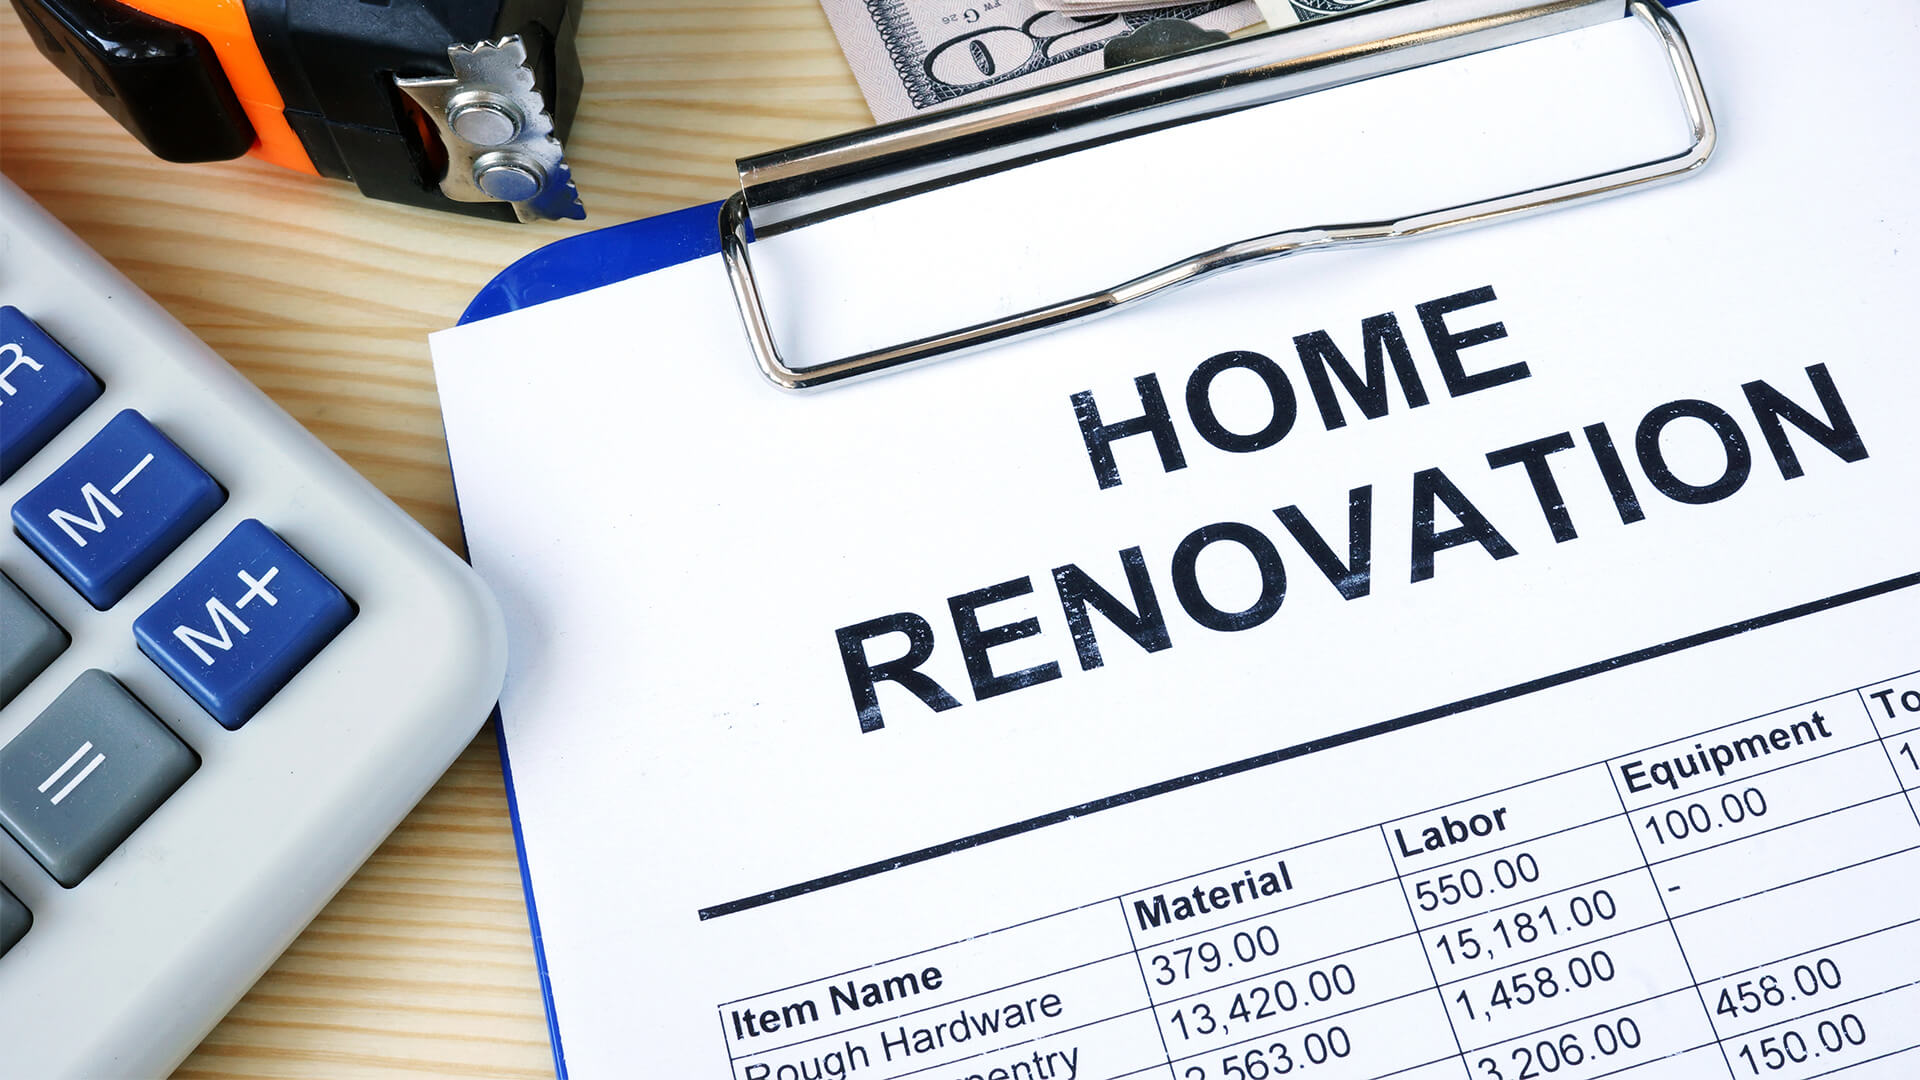 Home renovation budget